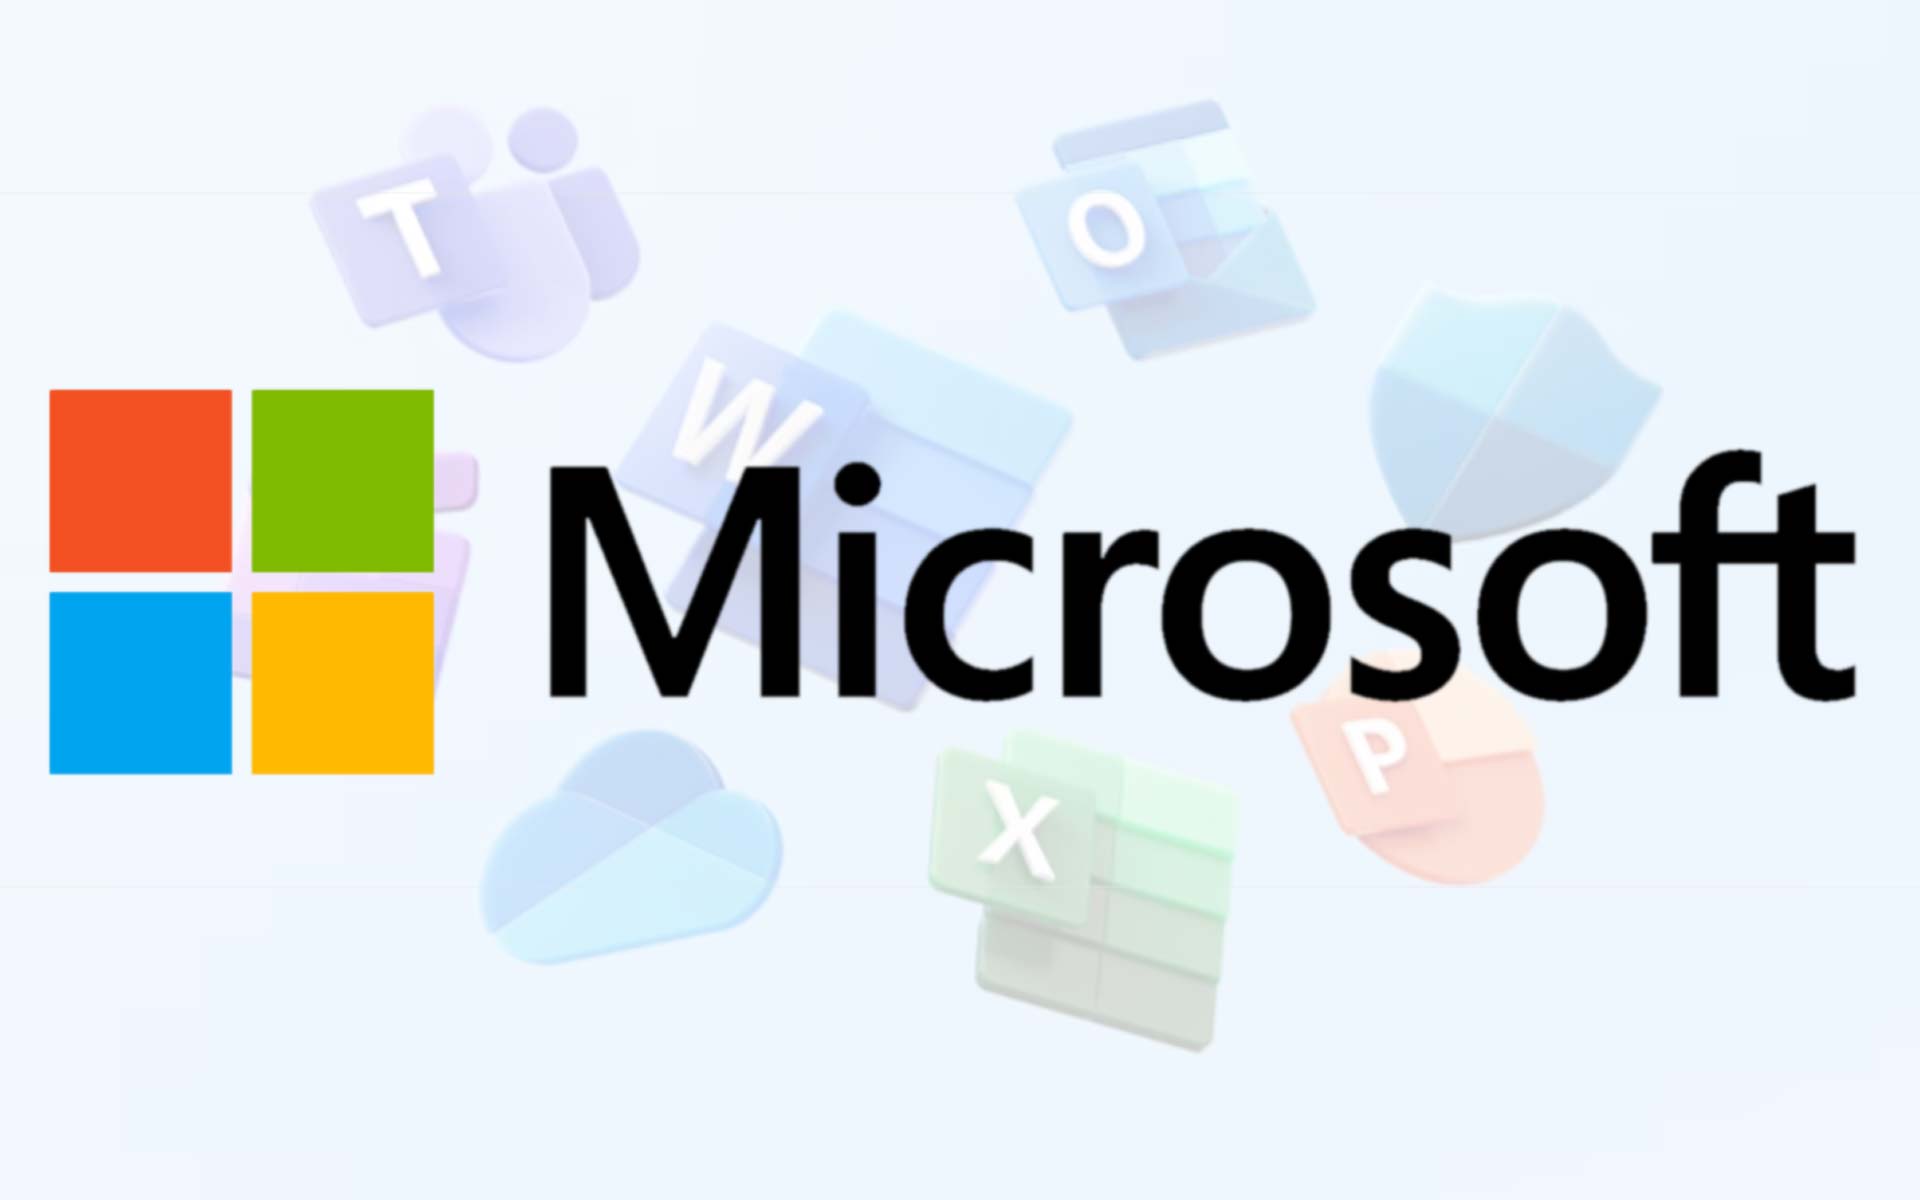 Microsoft is offering Software Engineering - Internship Opportunities